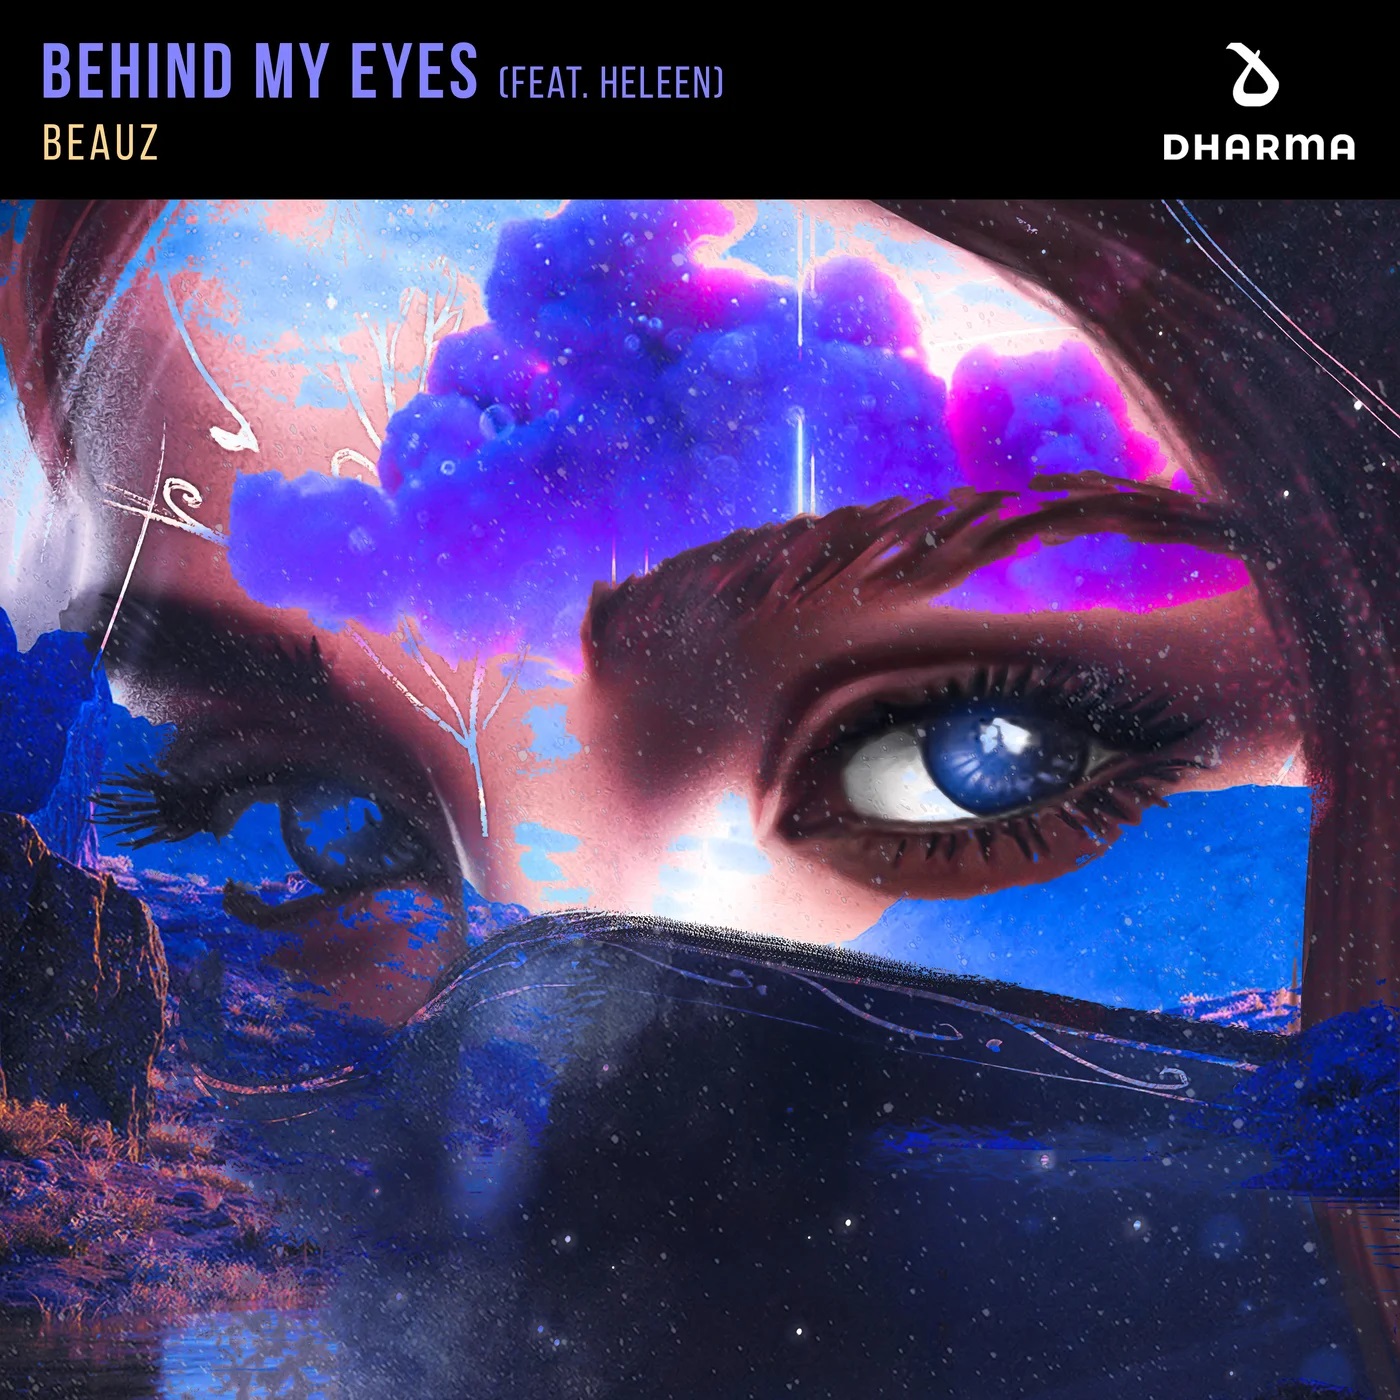 Beauz Feat. Heleen - Behind My Eyes (Extended Mix)